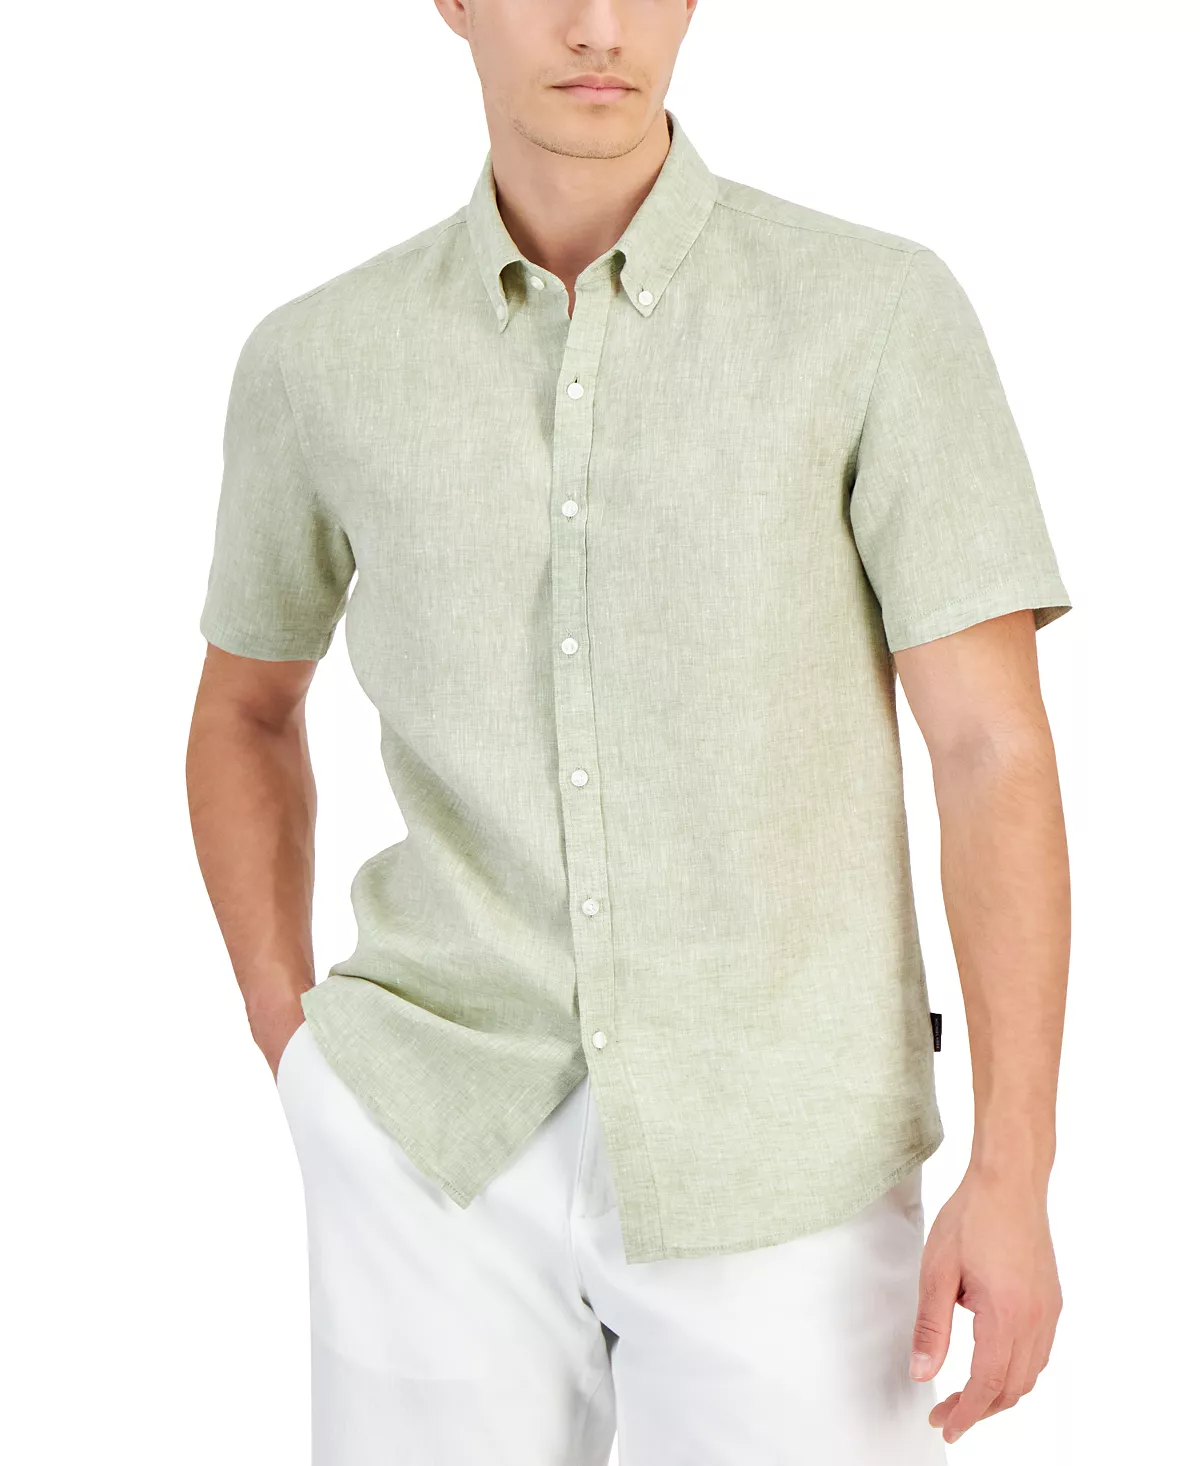 MICHAEL KORS Men's Slim-Fit Linen Short-Sleeve Shirt